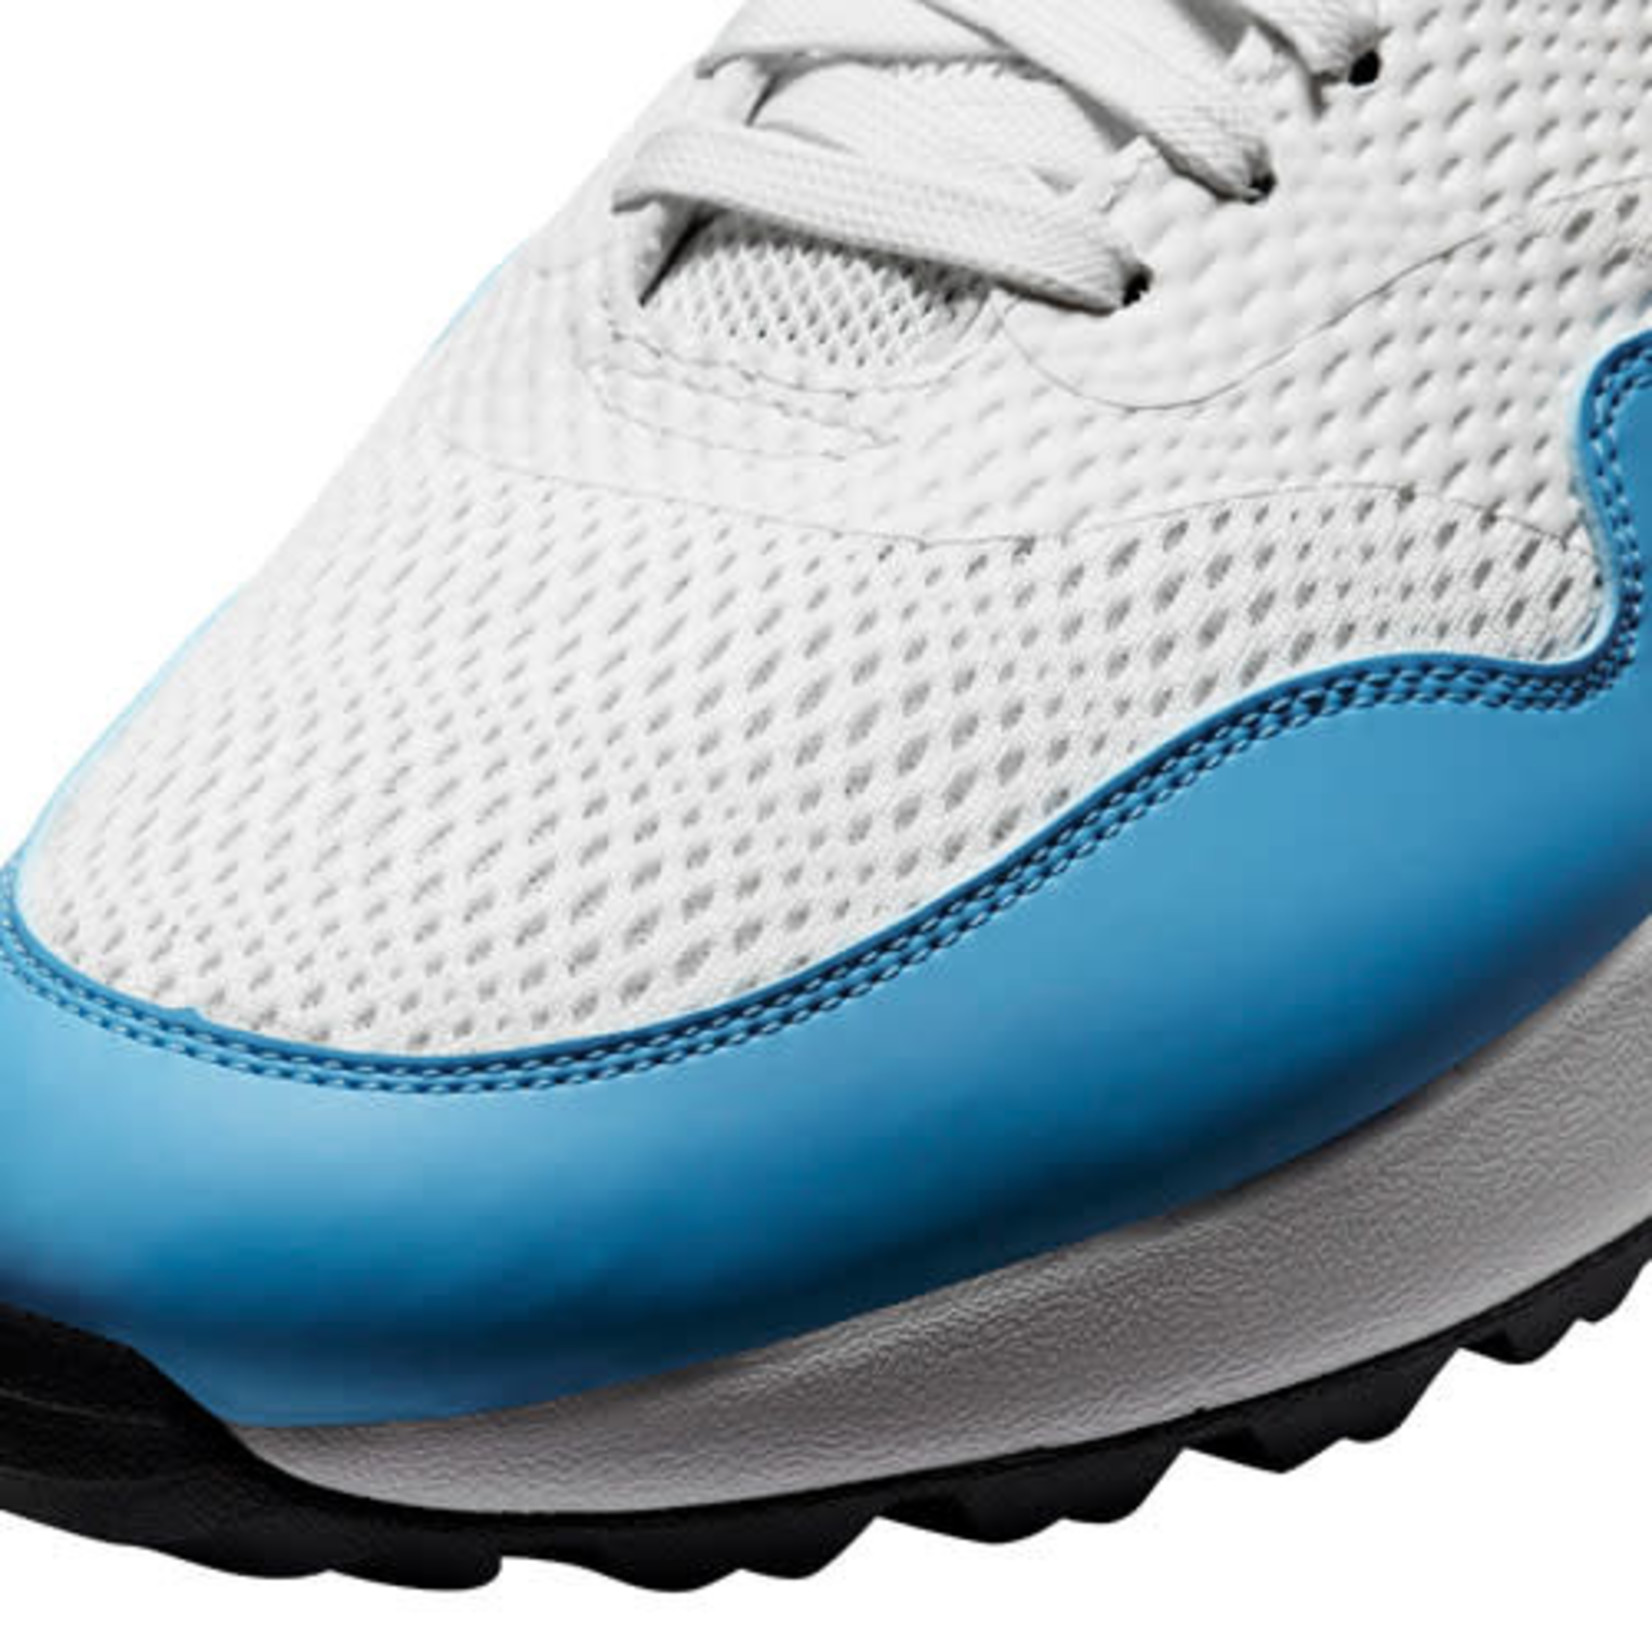 Nike Men's Nike Air Max 1G Spikeless Golf Shoe White/Blue